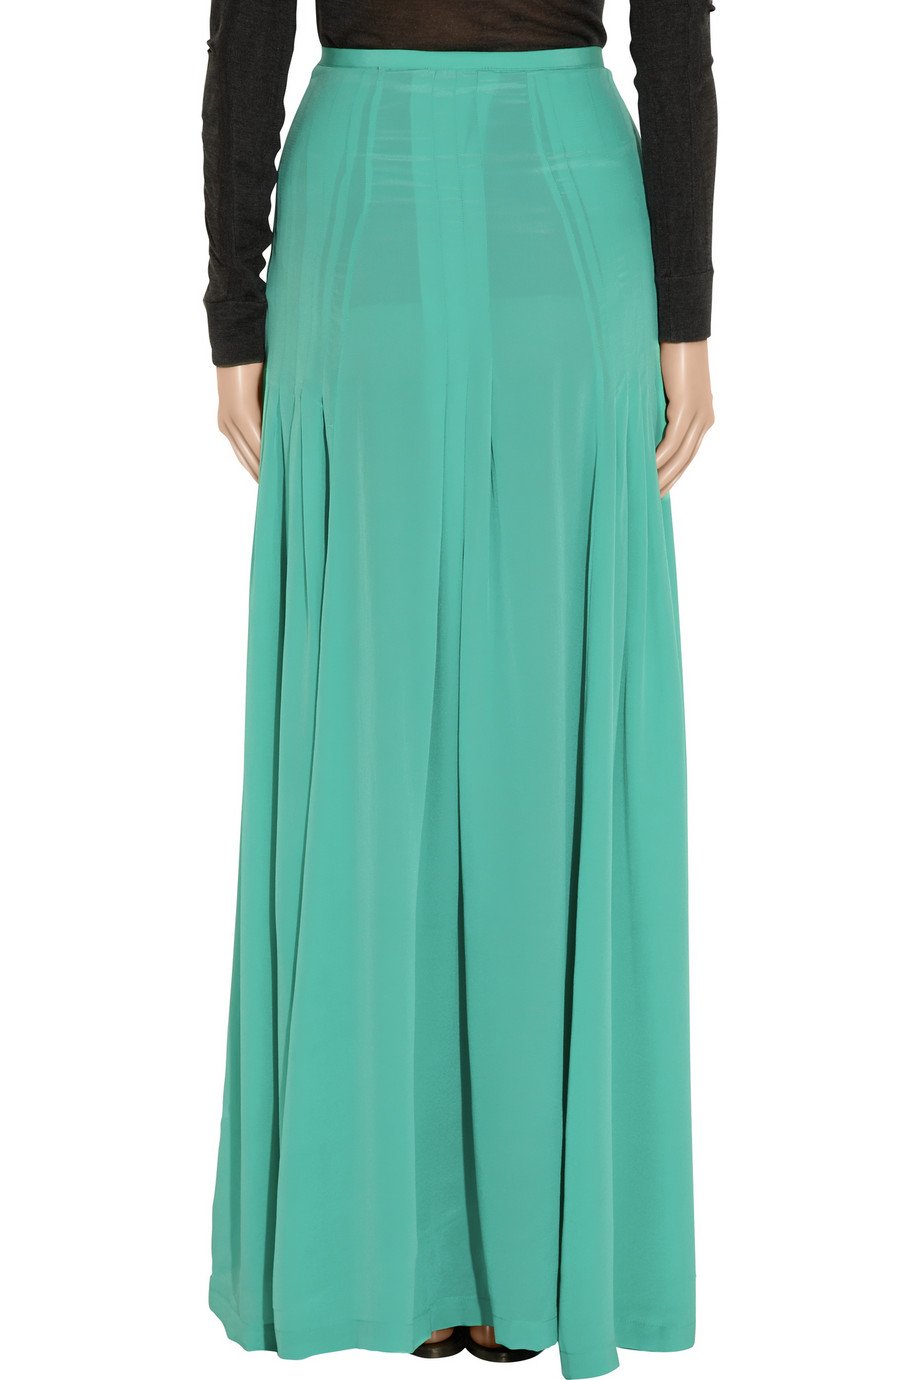 Lyst - Antik batik Jane Pleated Silk-crepe Maxi Skirt in Green